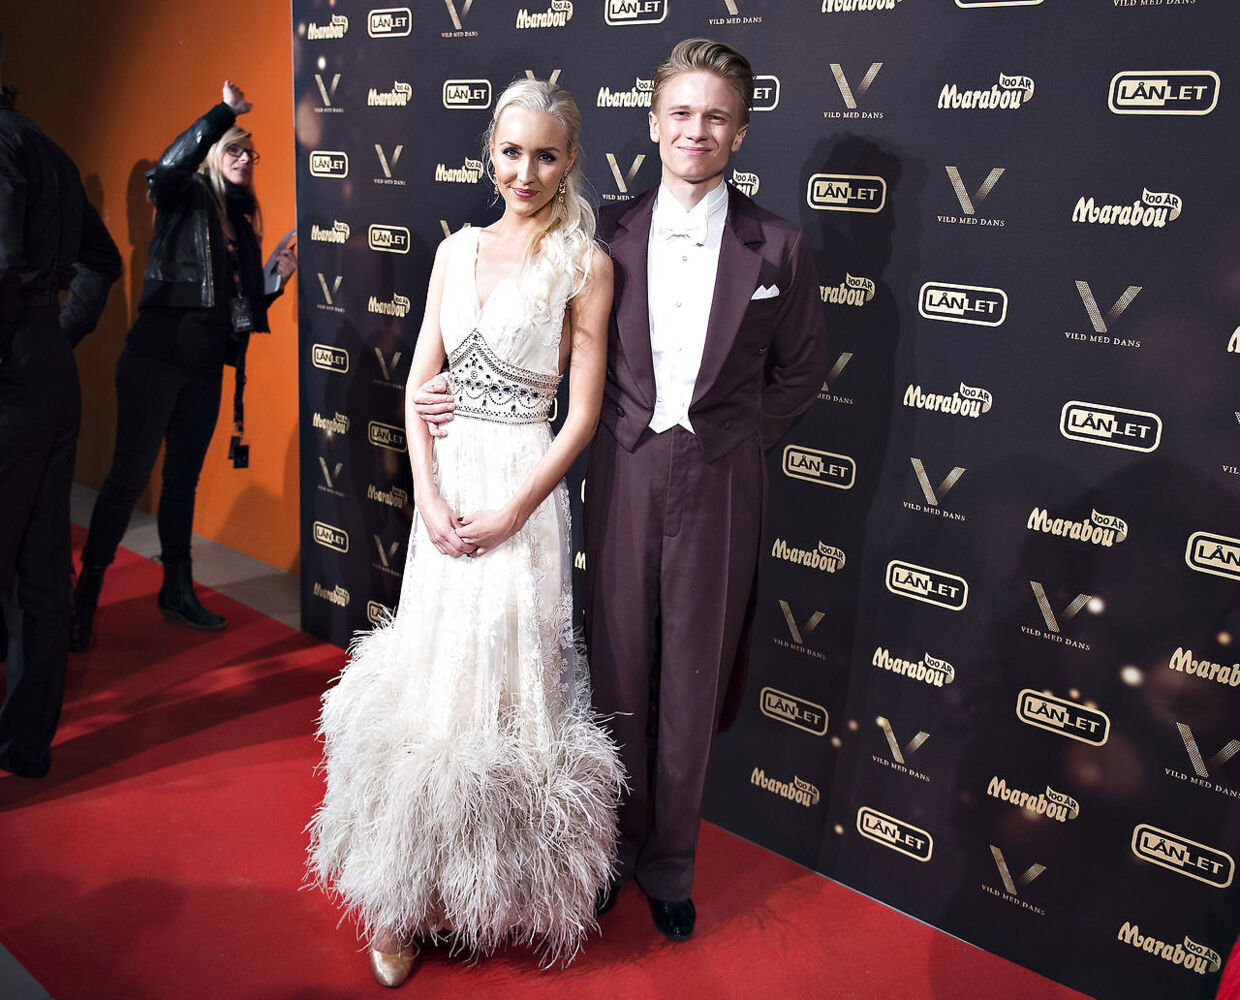 Skuespilleren Mathias Käki Jørgensen og danseren Mille Funk dansede sammen i 'Vild med dans' - nu er de også flyttet sammen.